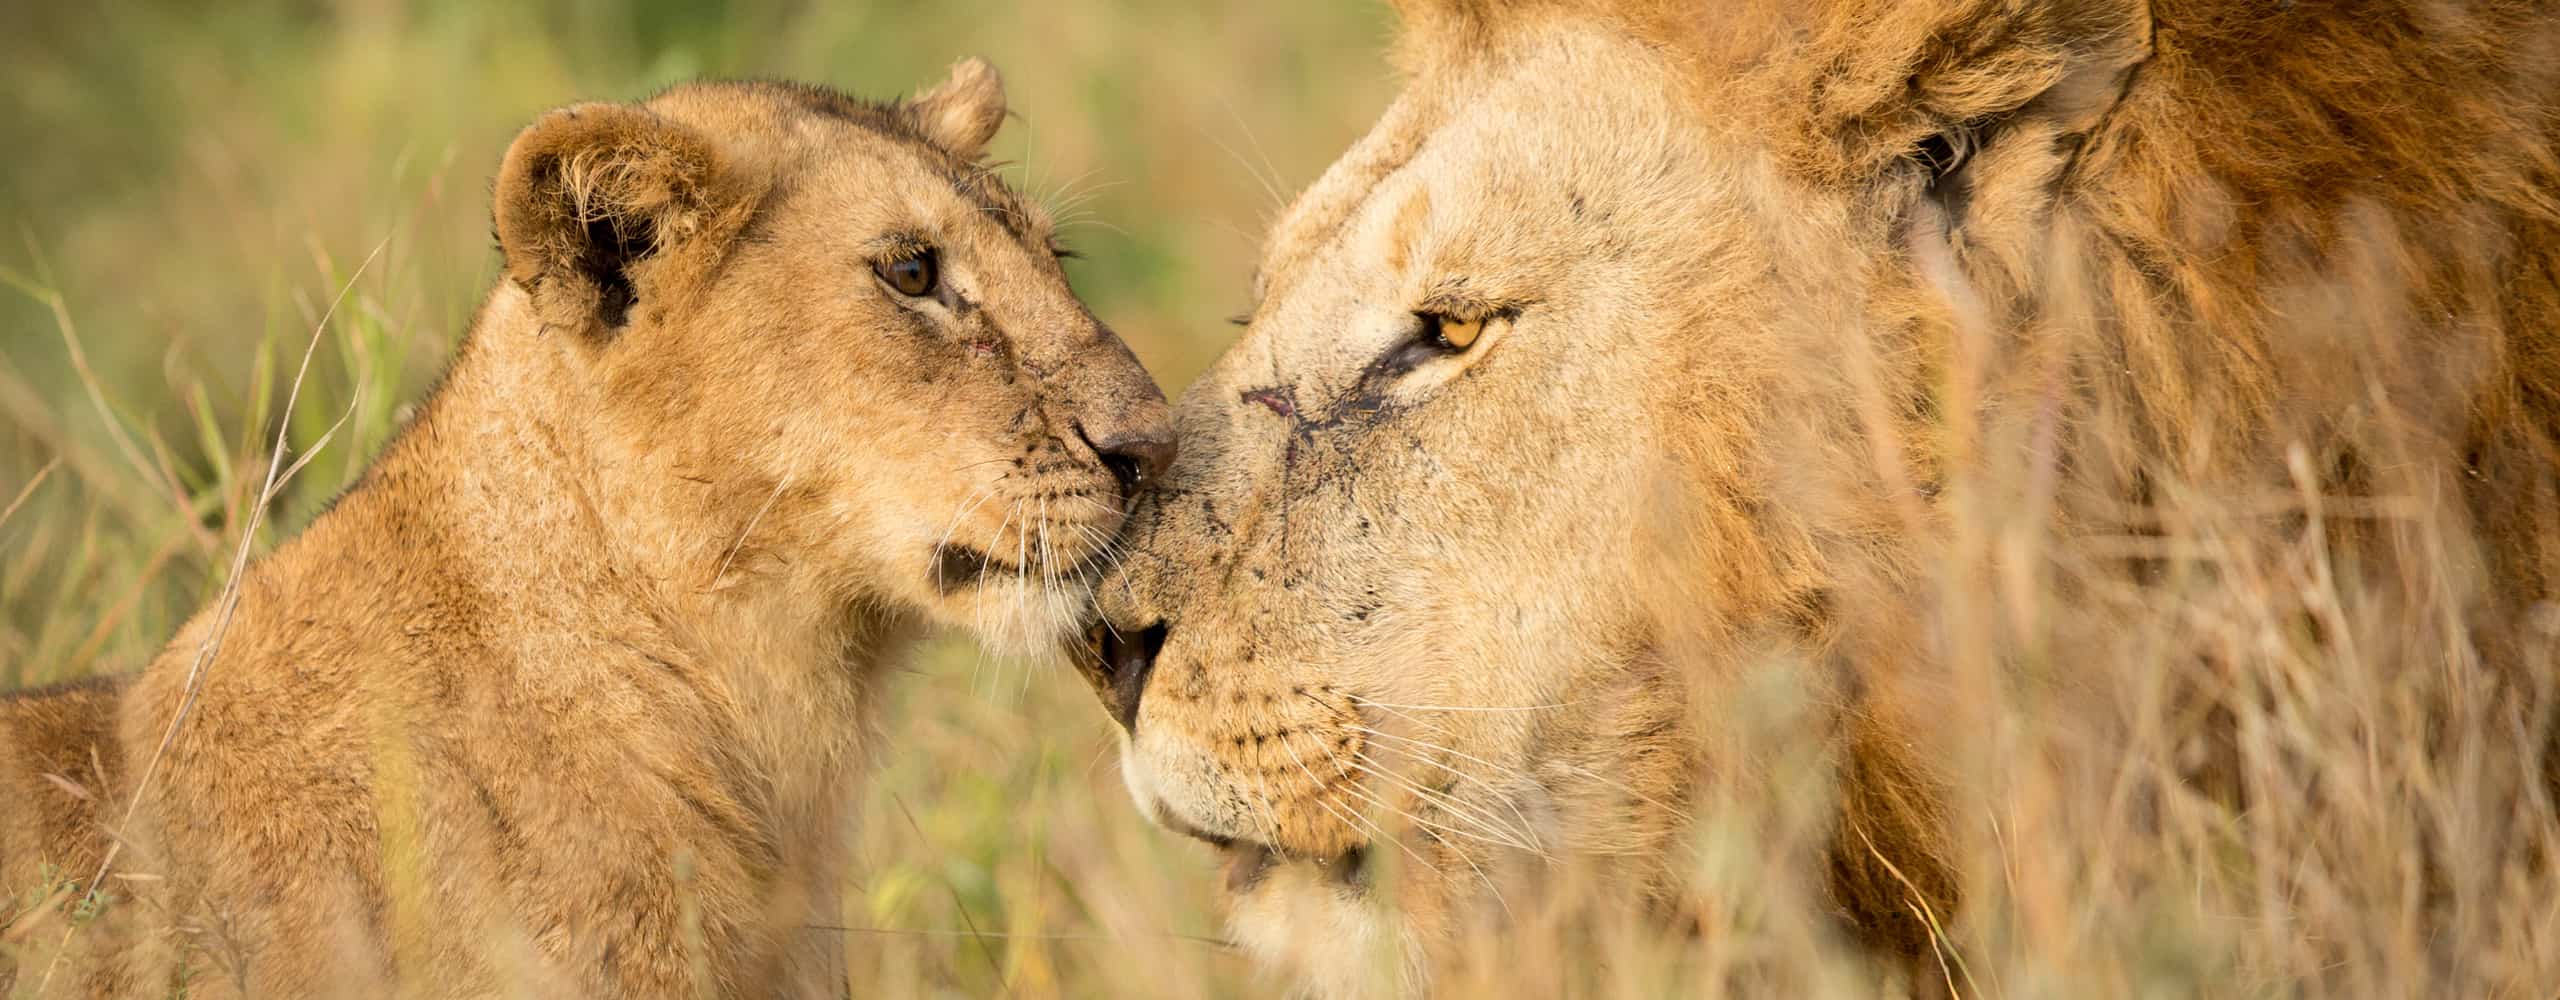 Lions In The Serengeti, Tanzania